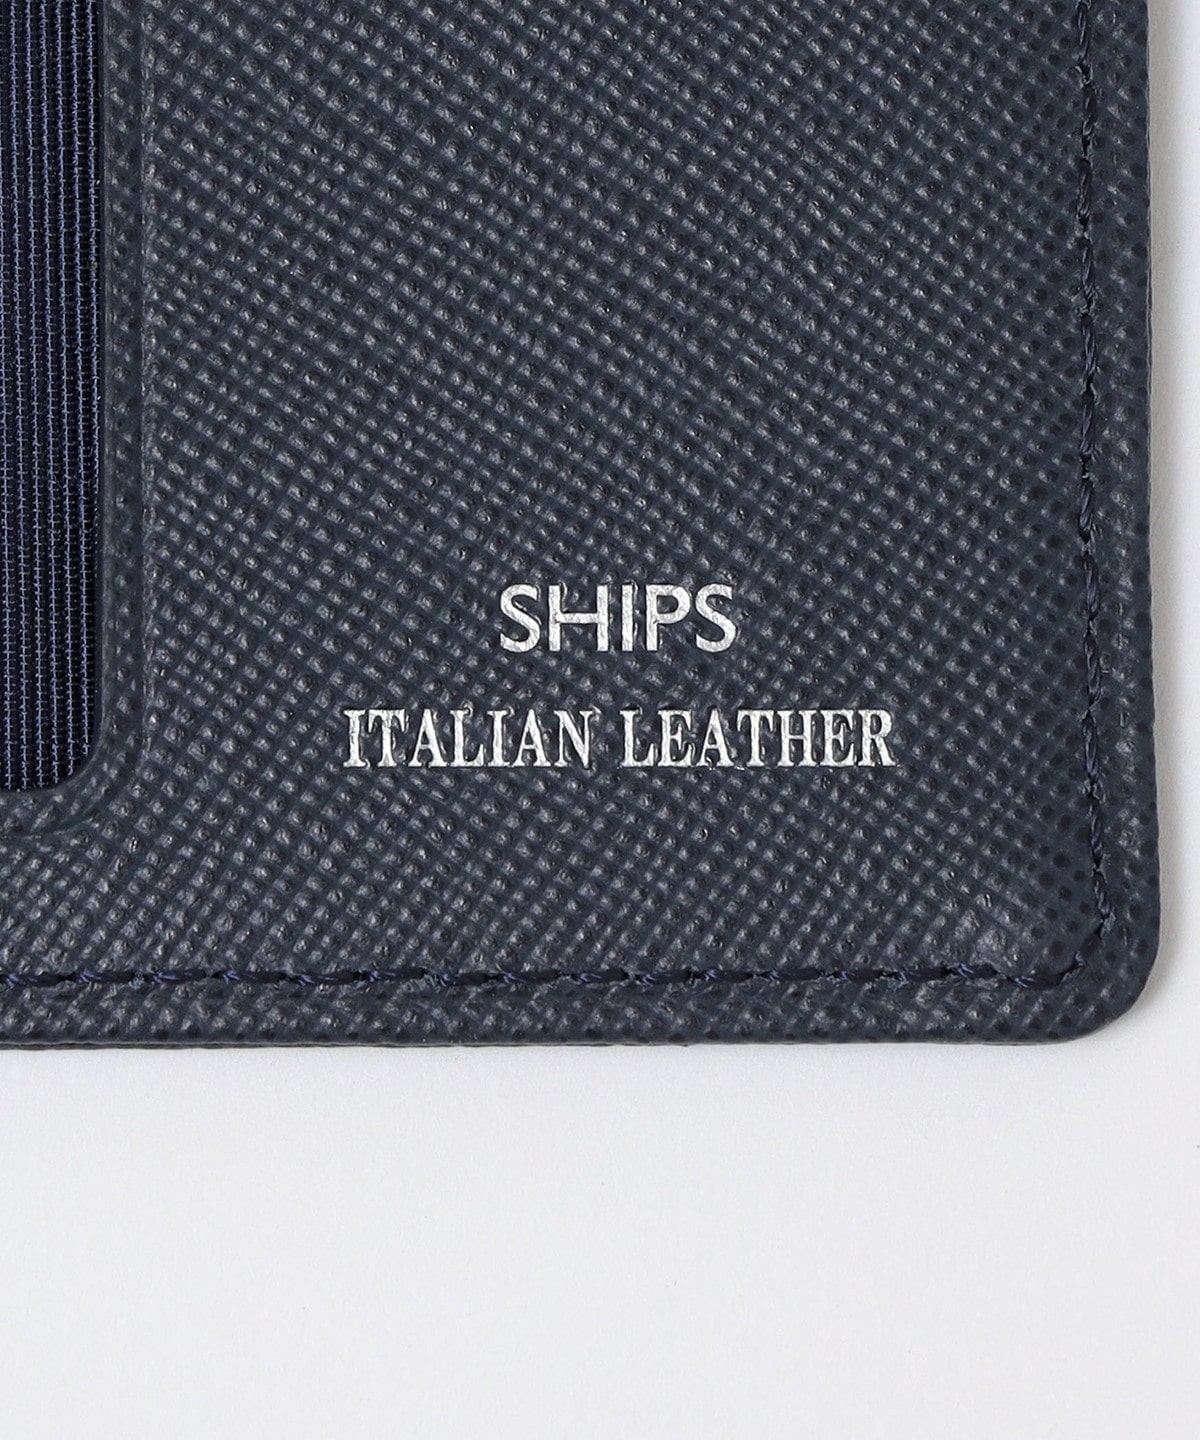 SHIPS: 【SAFFIANO LEATHER】イタリアンレザー IDケース: 小物 SHIPS